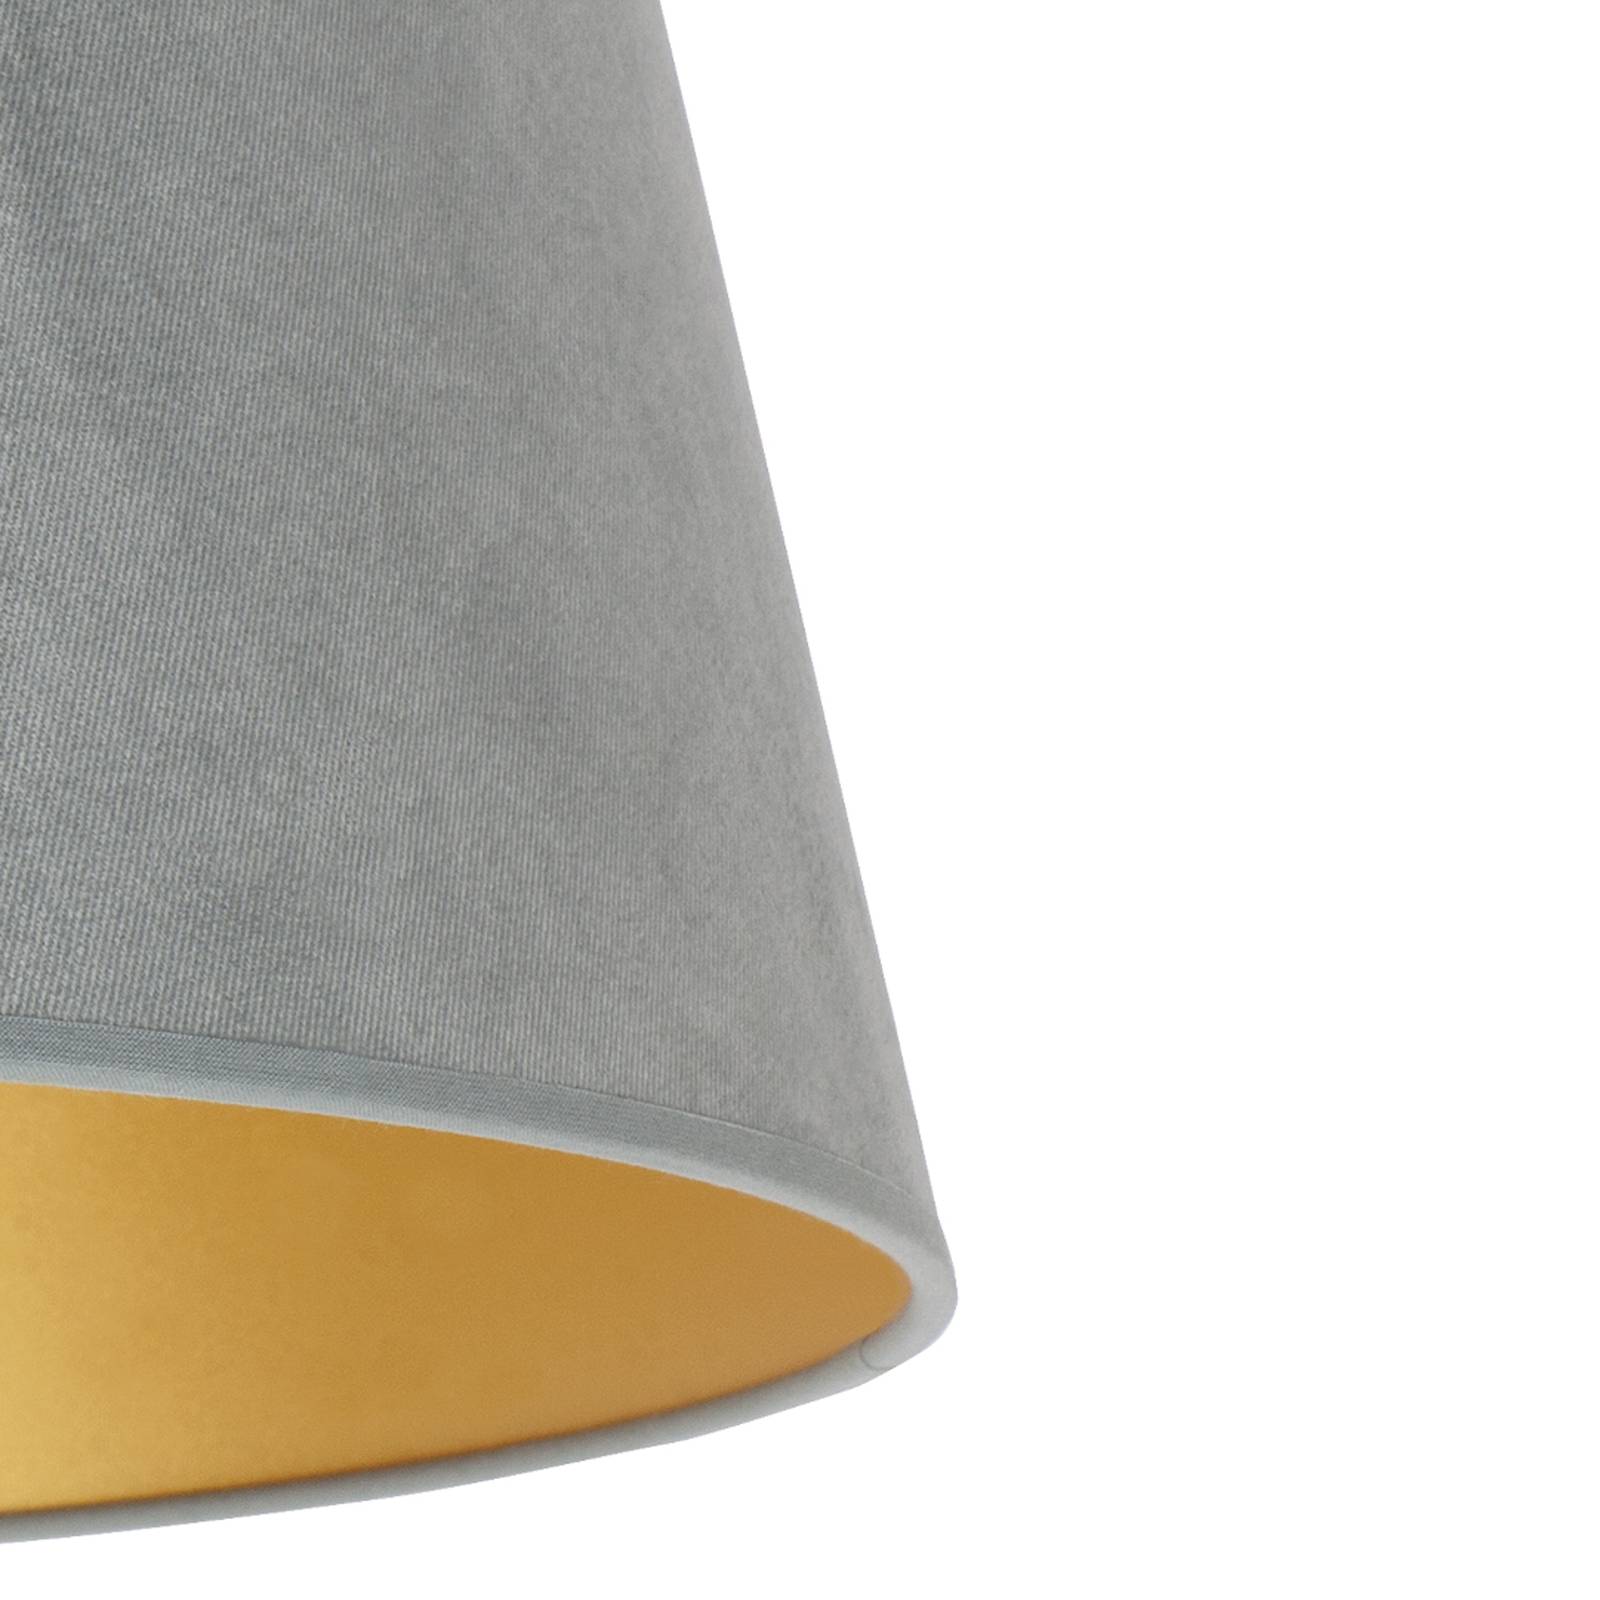 Duolla cone lámpaernyő 22,5 cm magas, mentazöld/arany